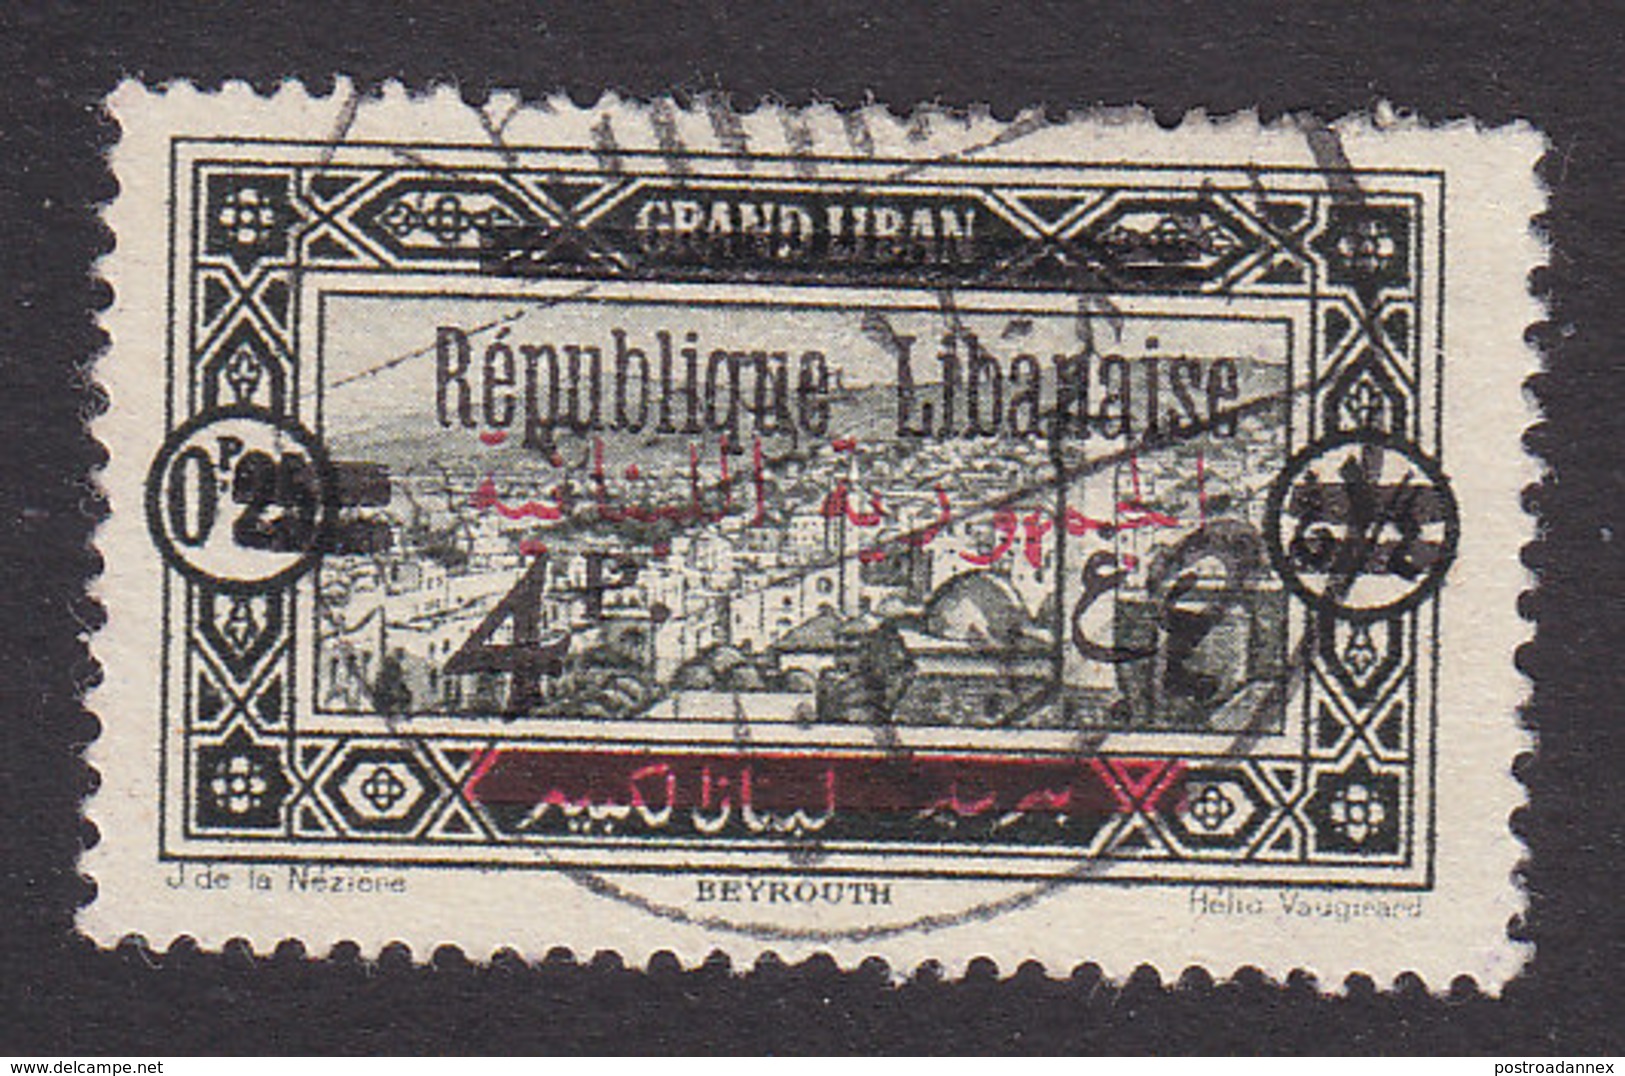 Lebanon, Scott #96, Used, Scenes Of Lebanon Overprinted, Issued 1928 - Used Stamps